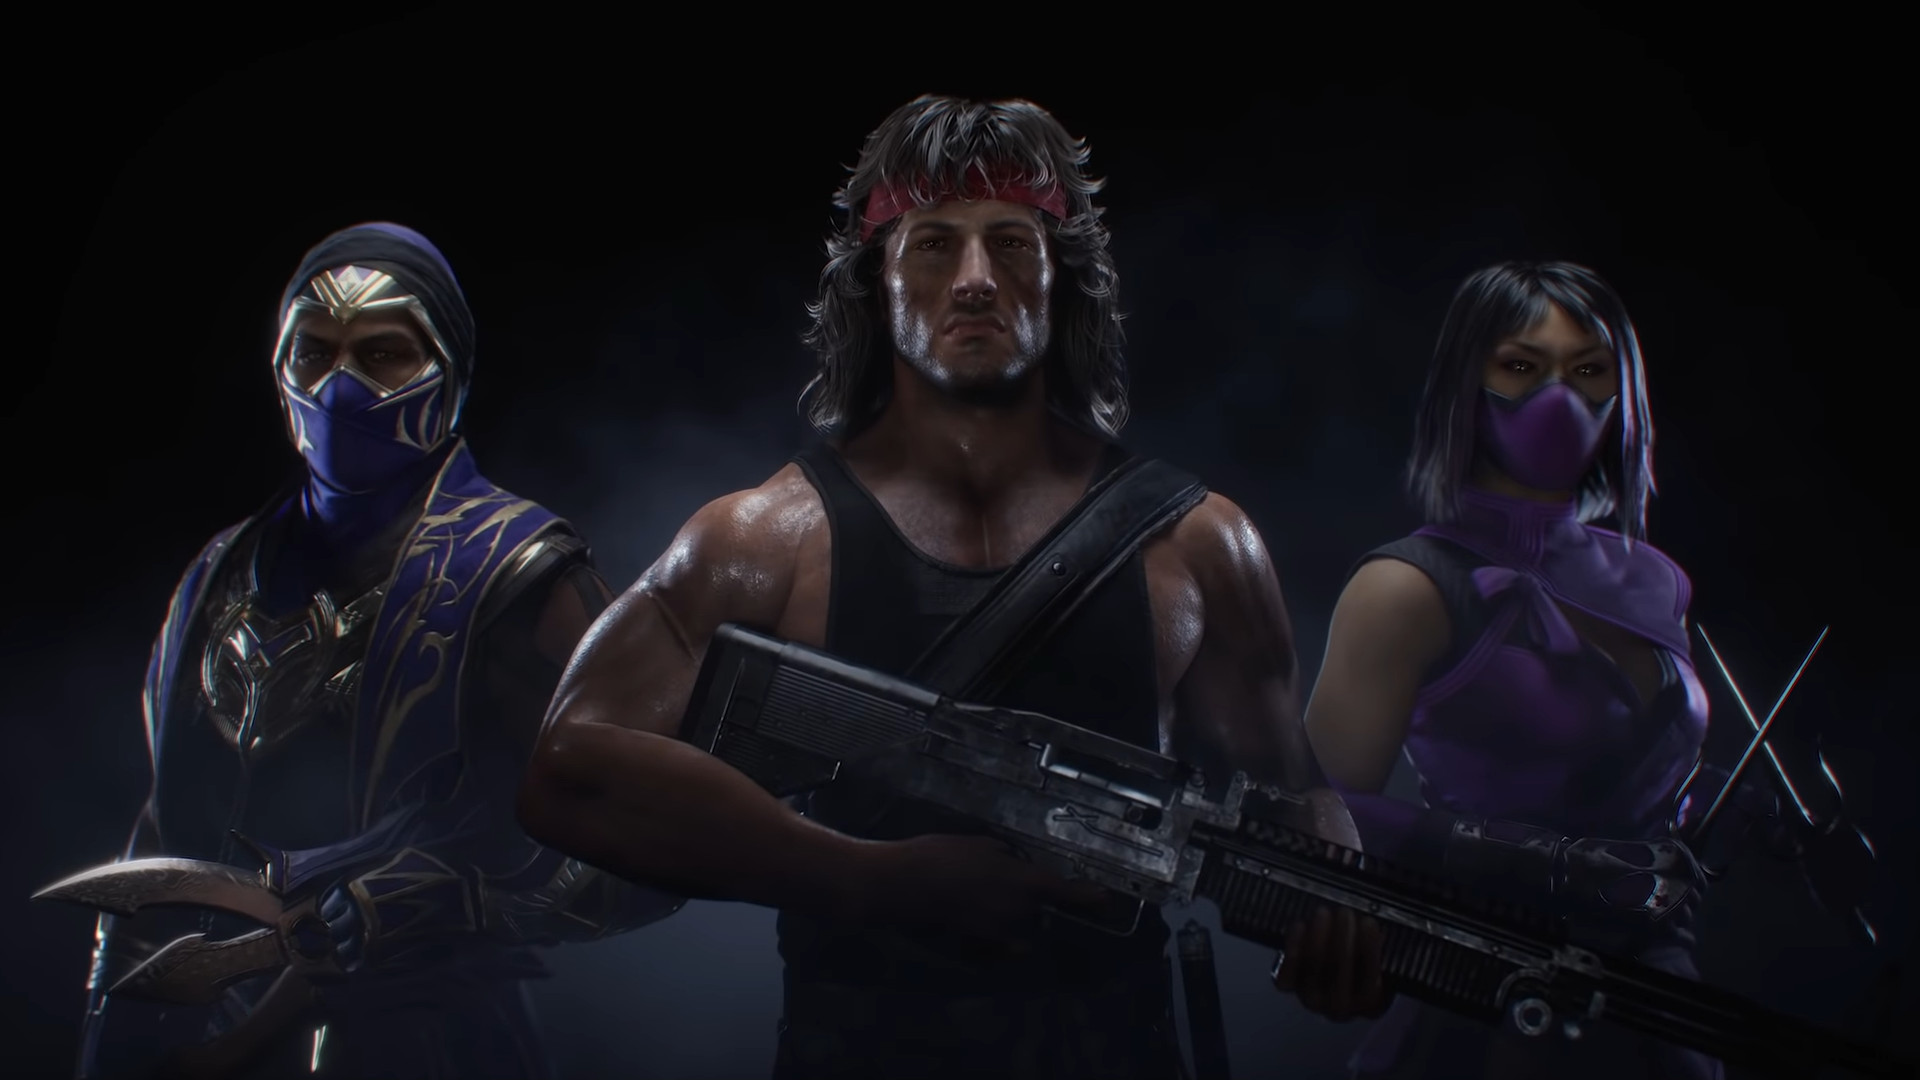 Mileena, Rain, and Rambo join Mortal Kombat 11 in November